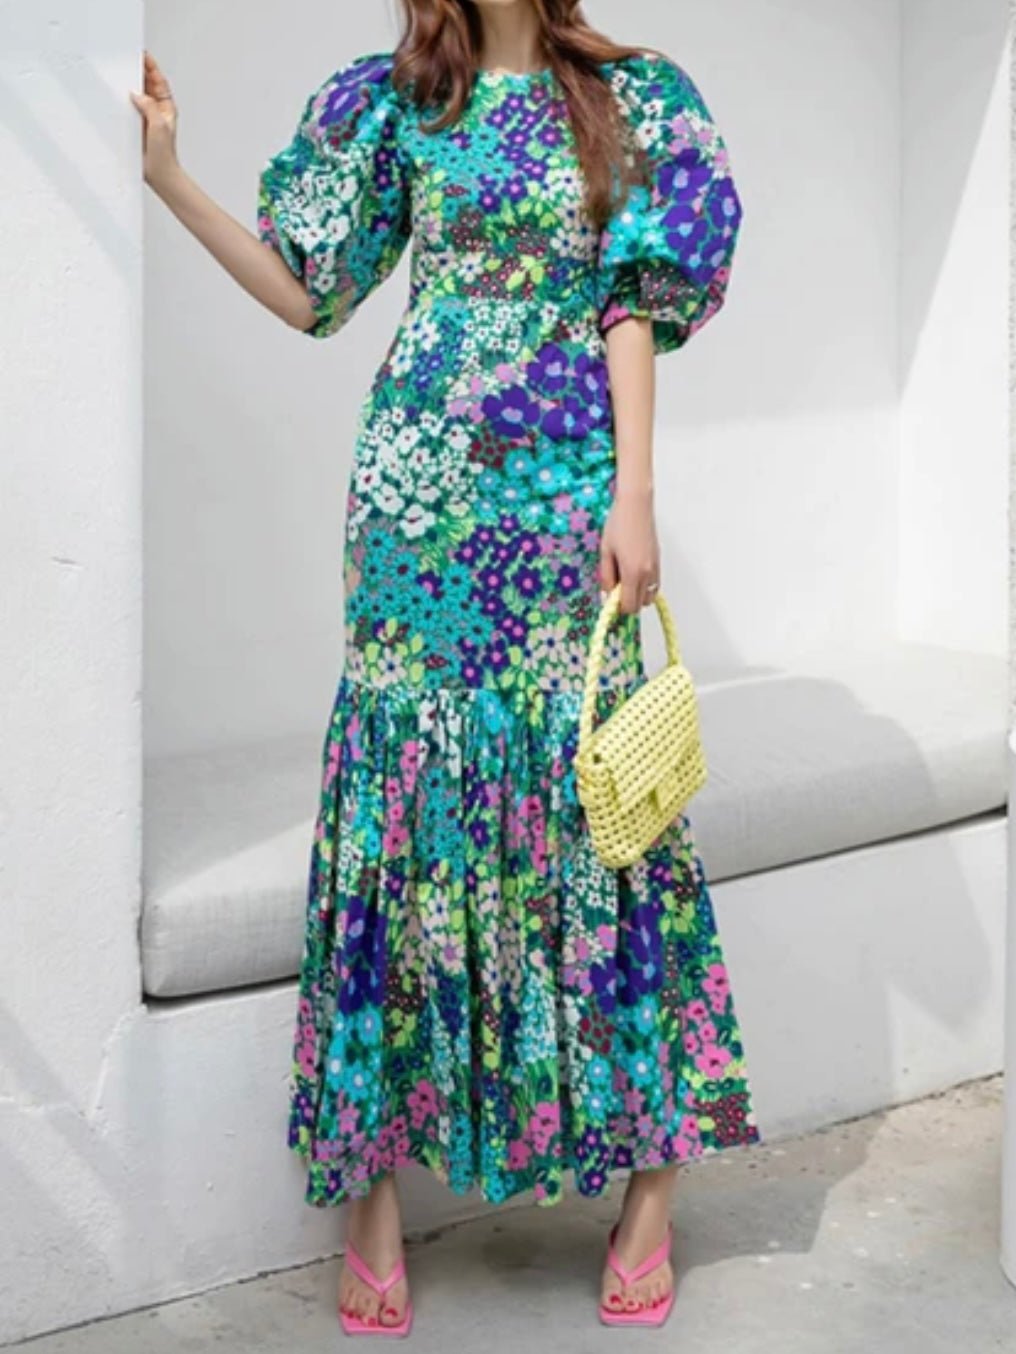 Turquoise and purple floral pattern maxi dress - Wapas